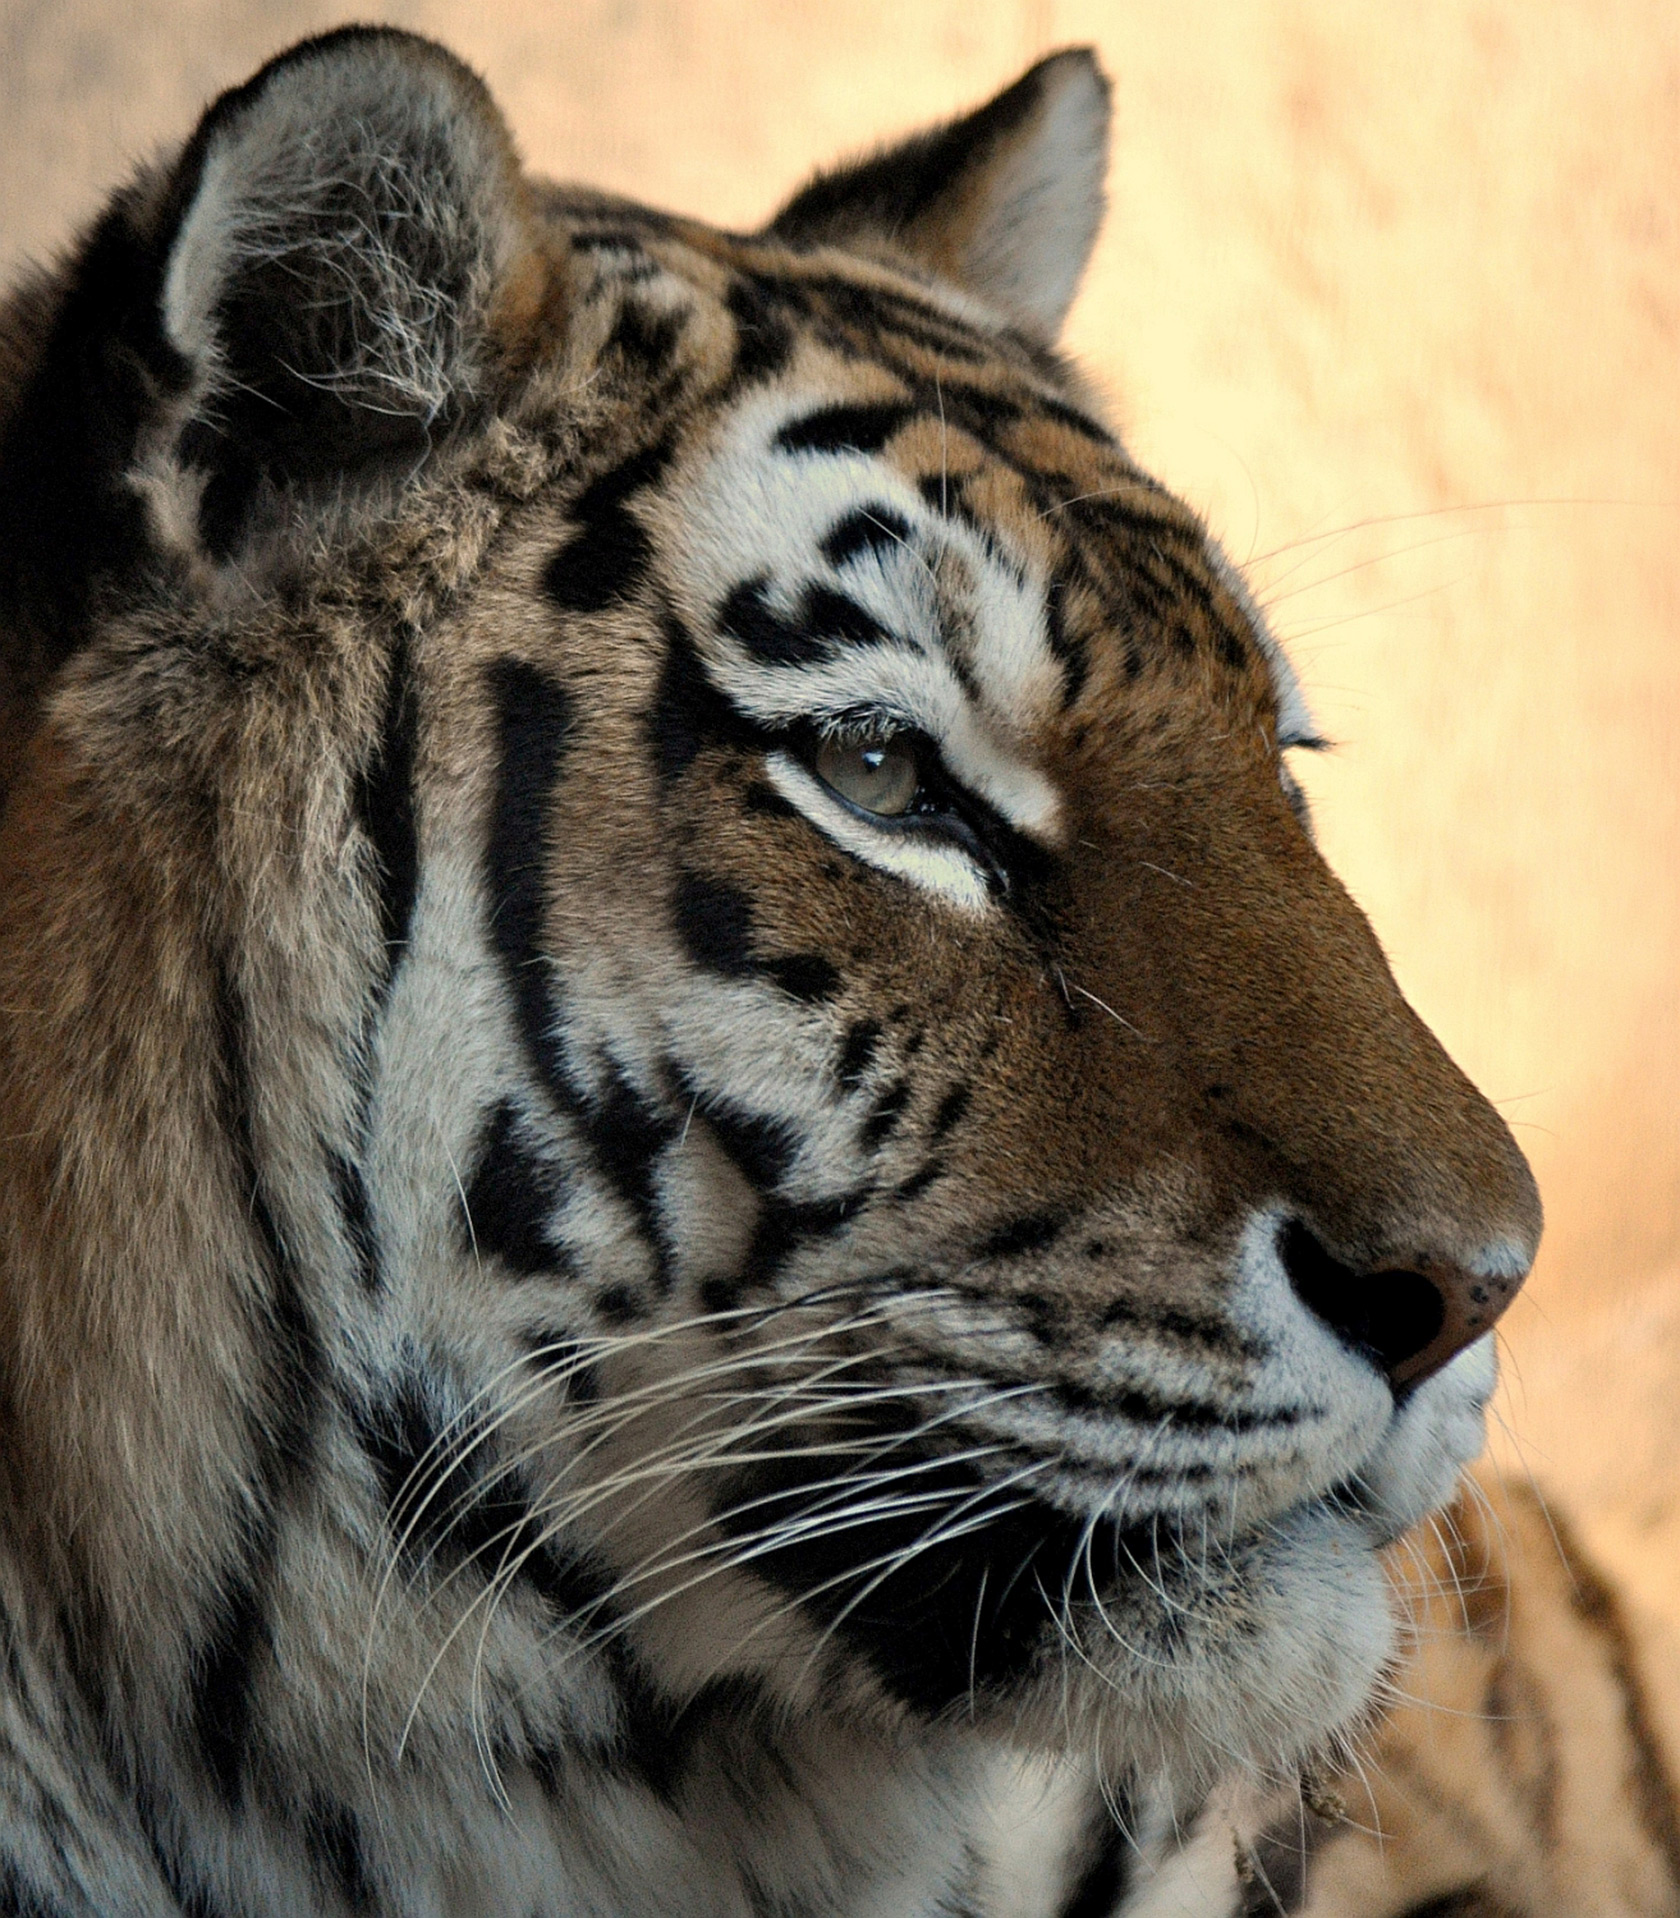 Tiger Kolja im Erlebnis-Zoo Hannover